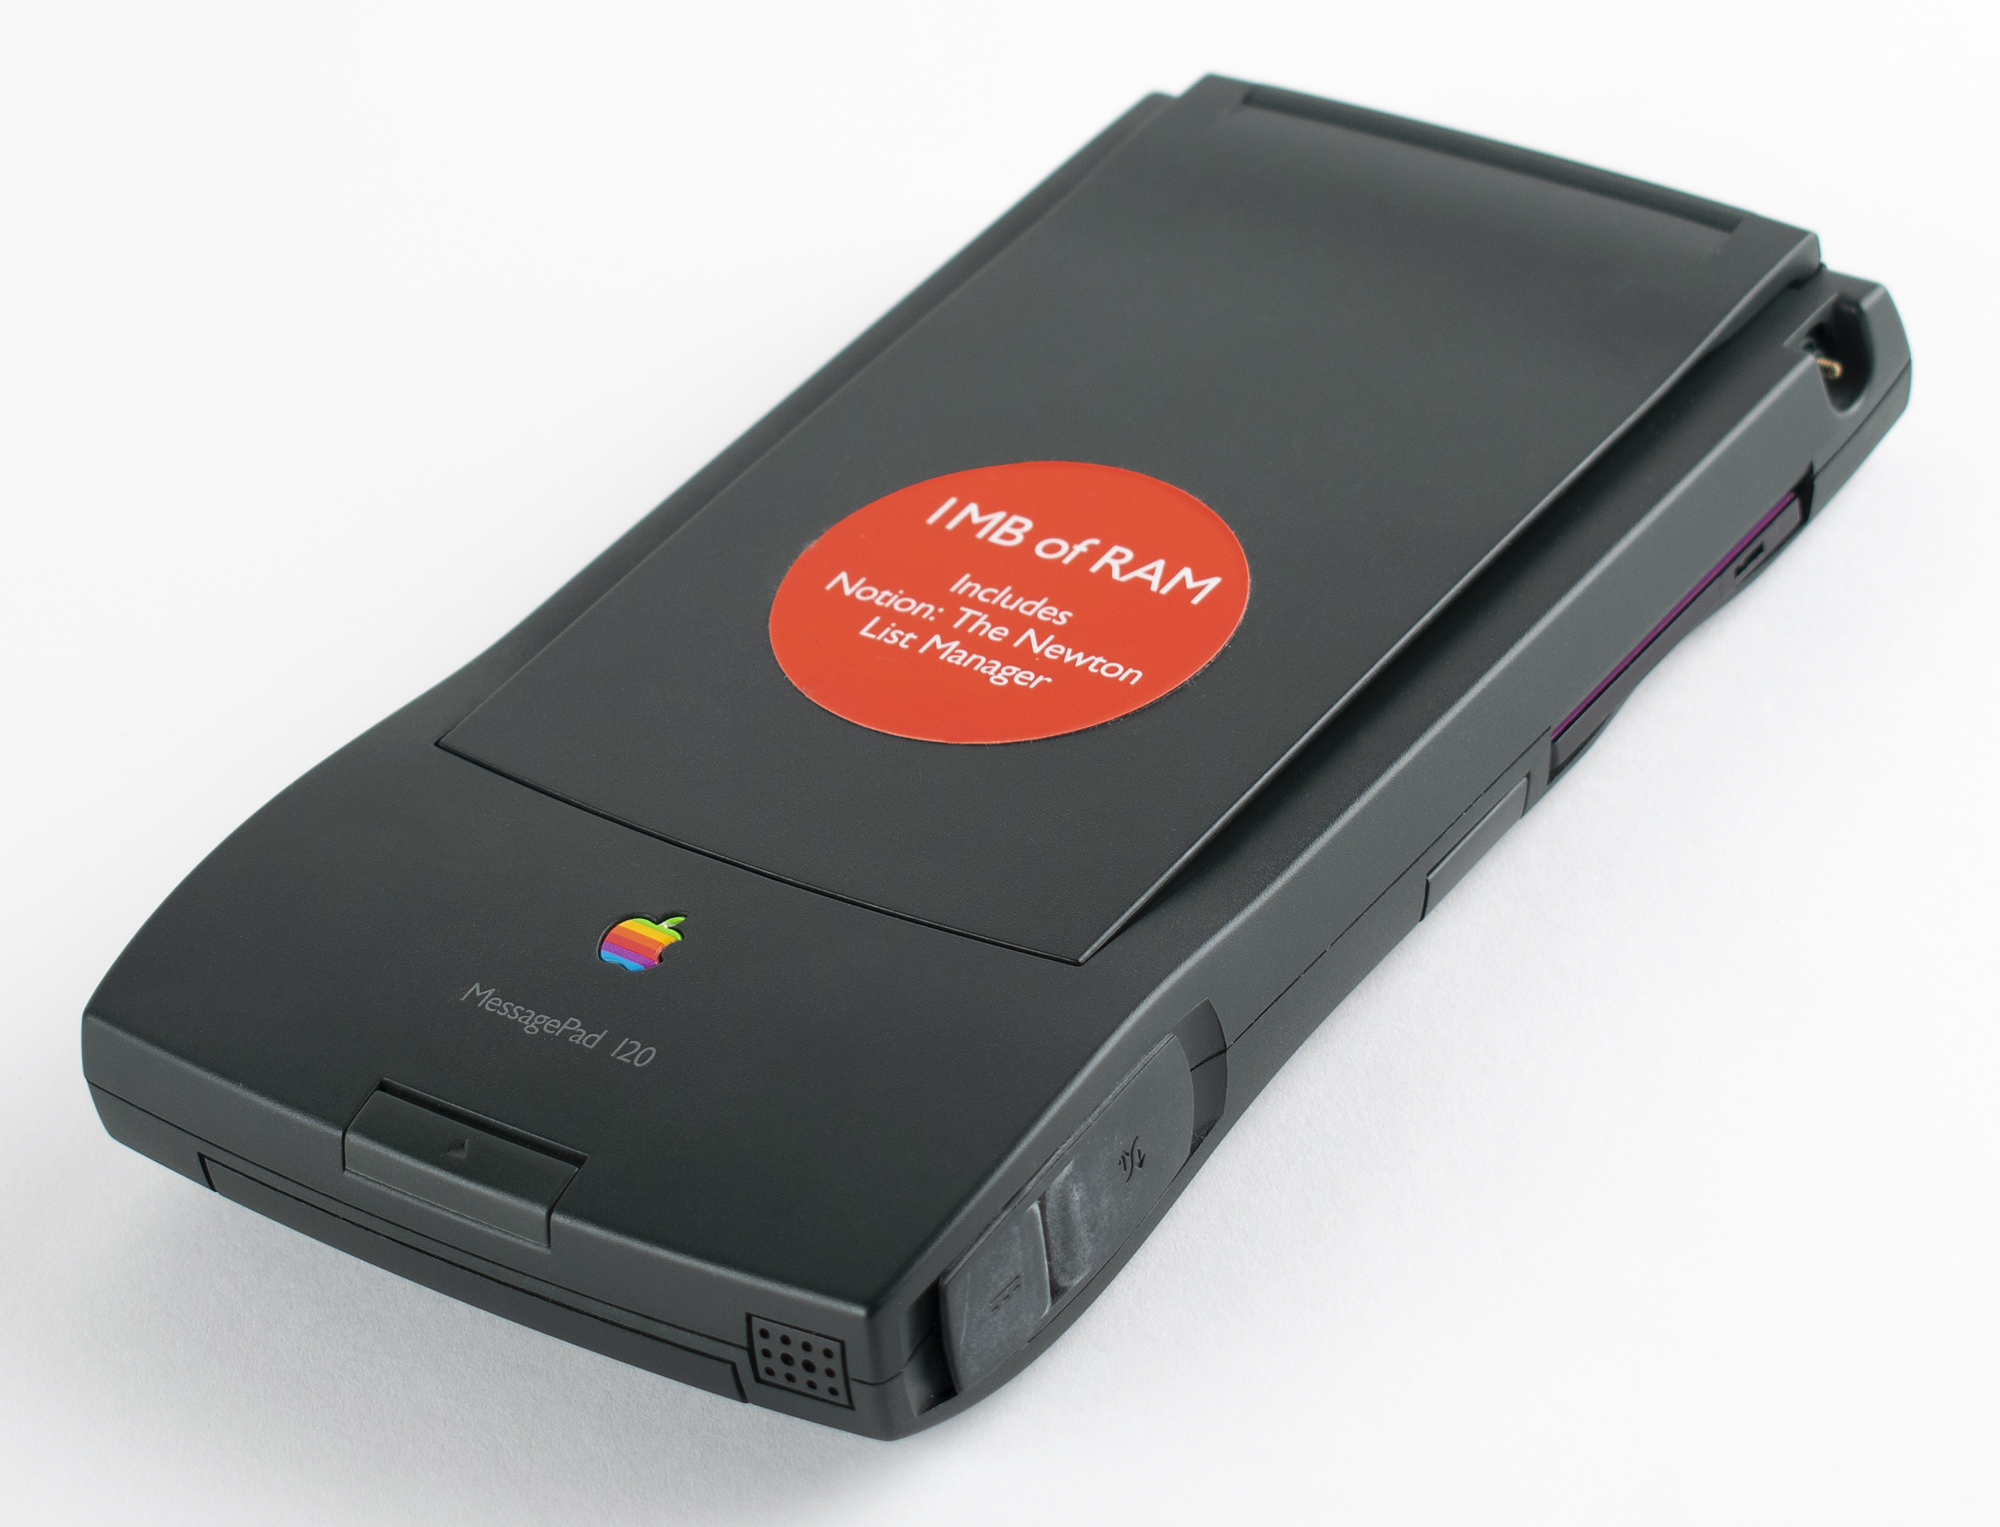 Apple Newton MessagePad 120 | RR Auction